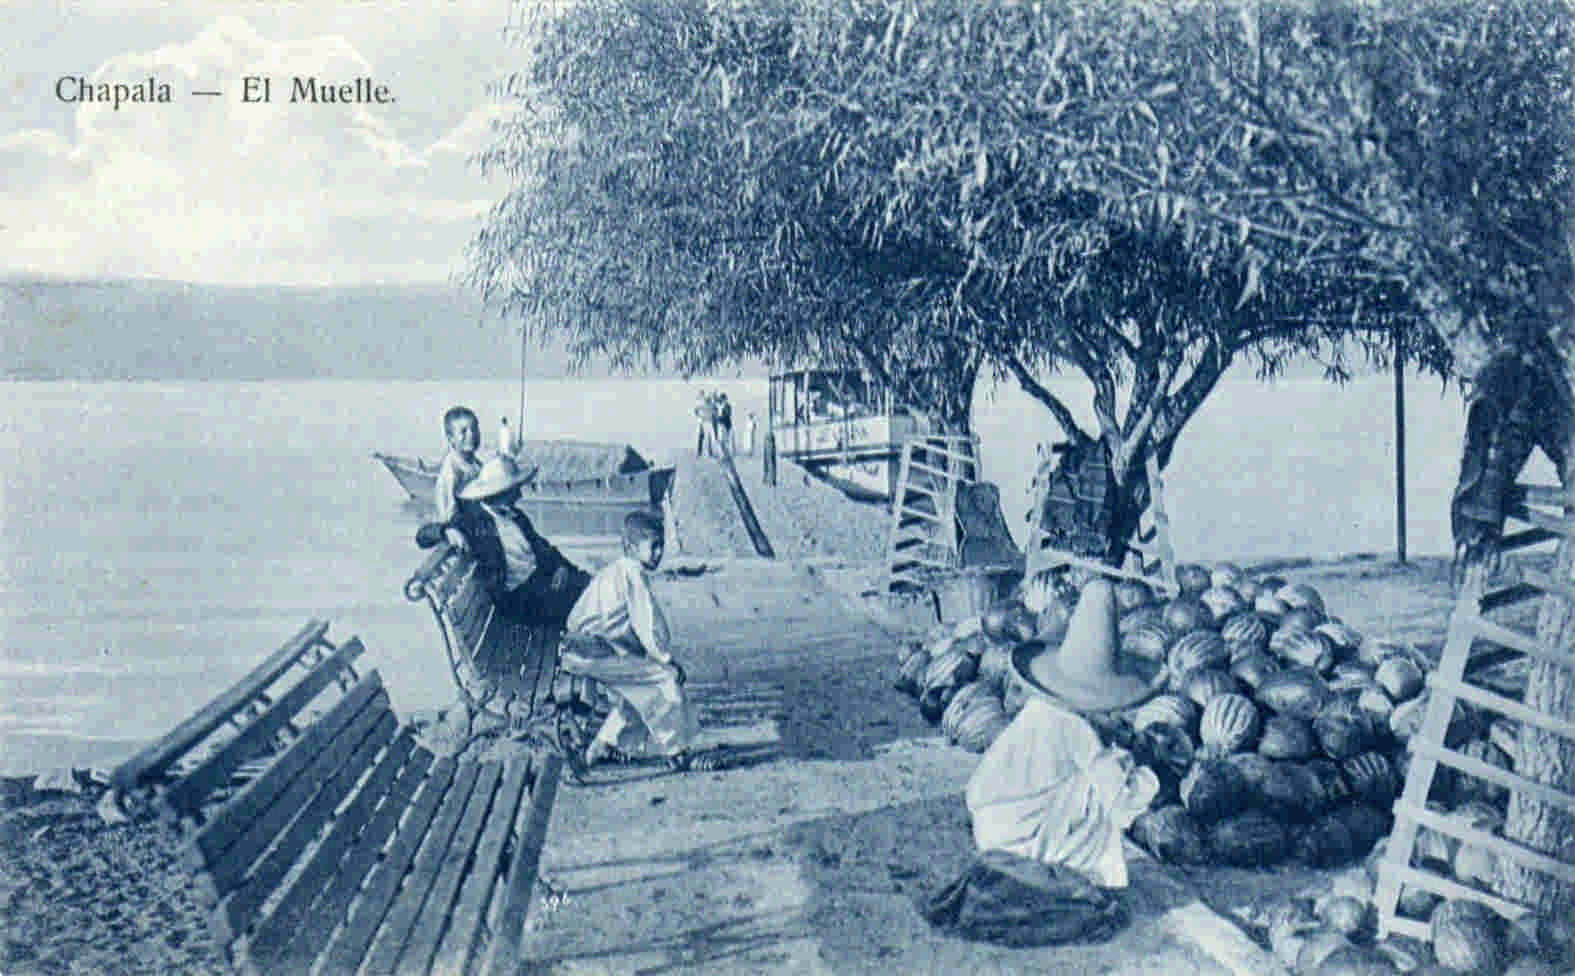 Lupercio. c 1906. Pier and watermelon merchant, Chapala. (Fig 5-8 of Lake Chapala: A Postcard History)